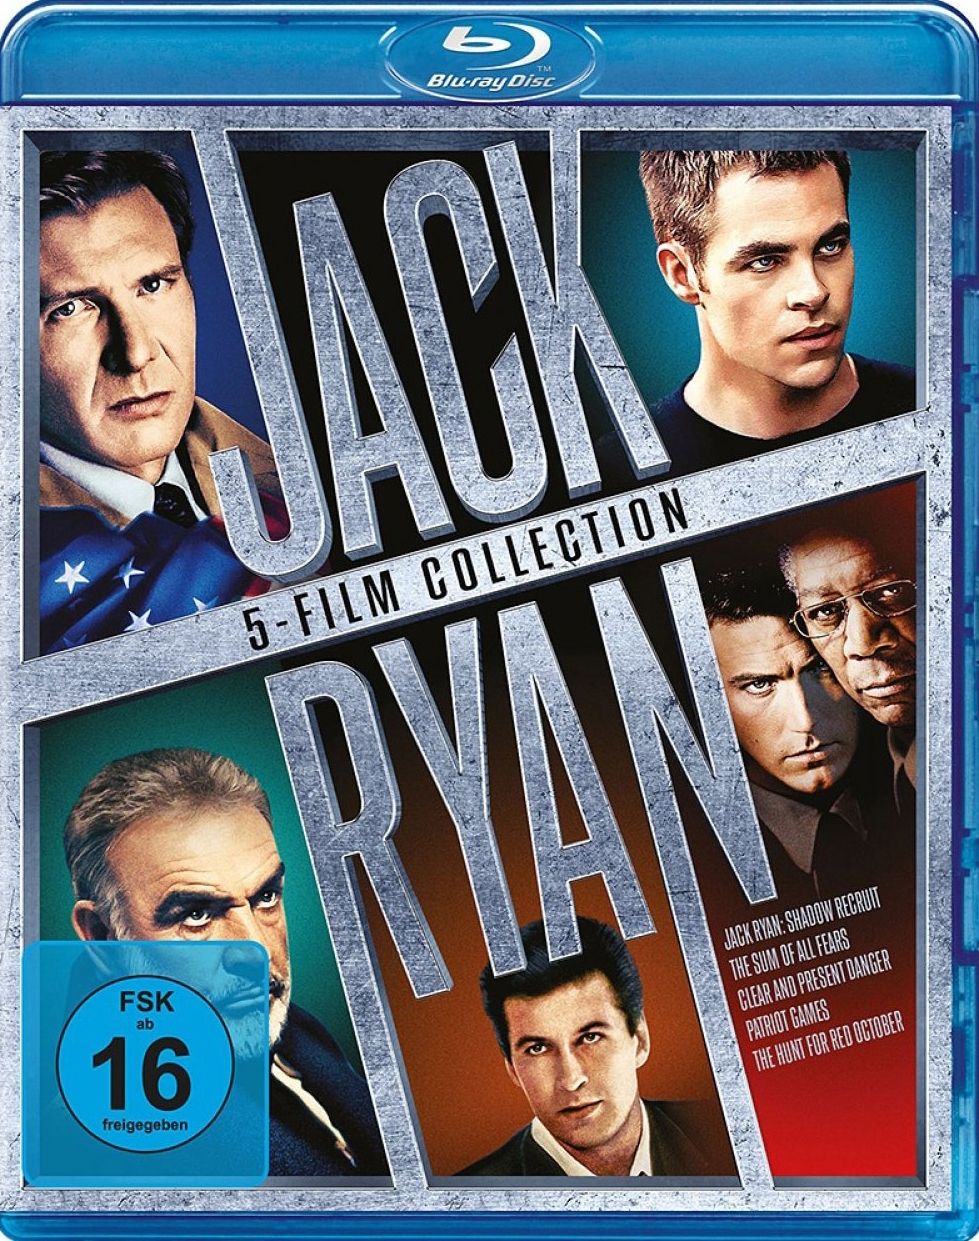 Jack Ryan - 5-Film Collection (5 Discs) (BLURAY)